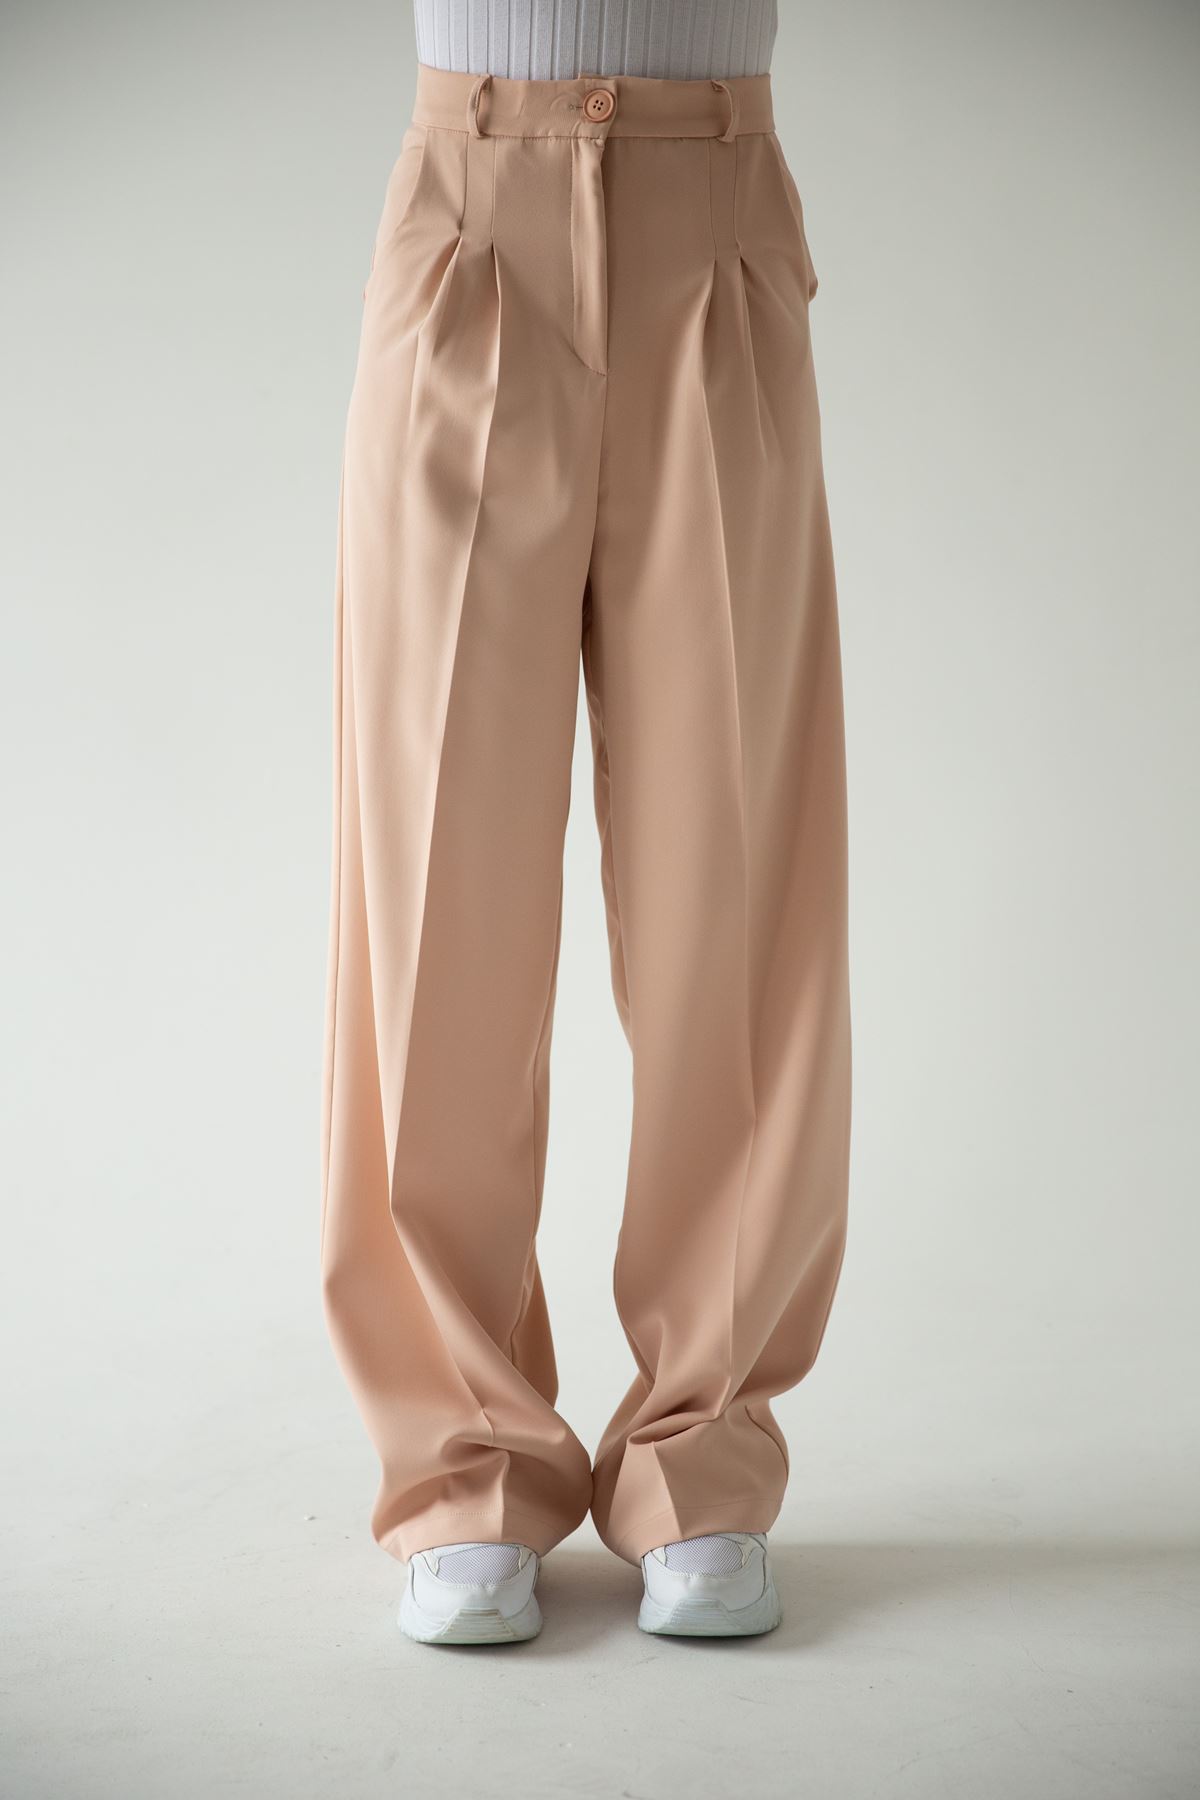 Atlas Fabric Long Sleeve Comfy Women Palazzo Trouser - Beige 